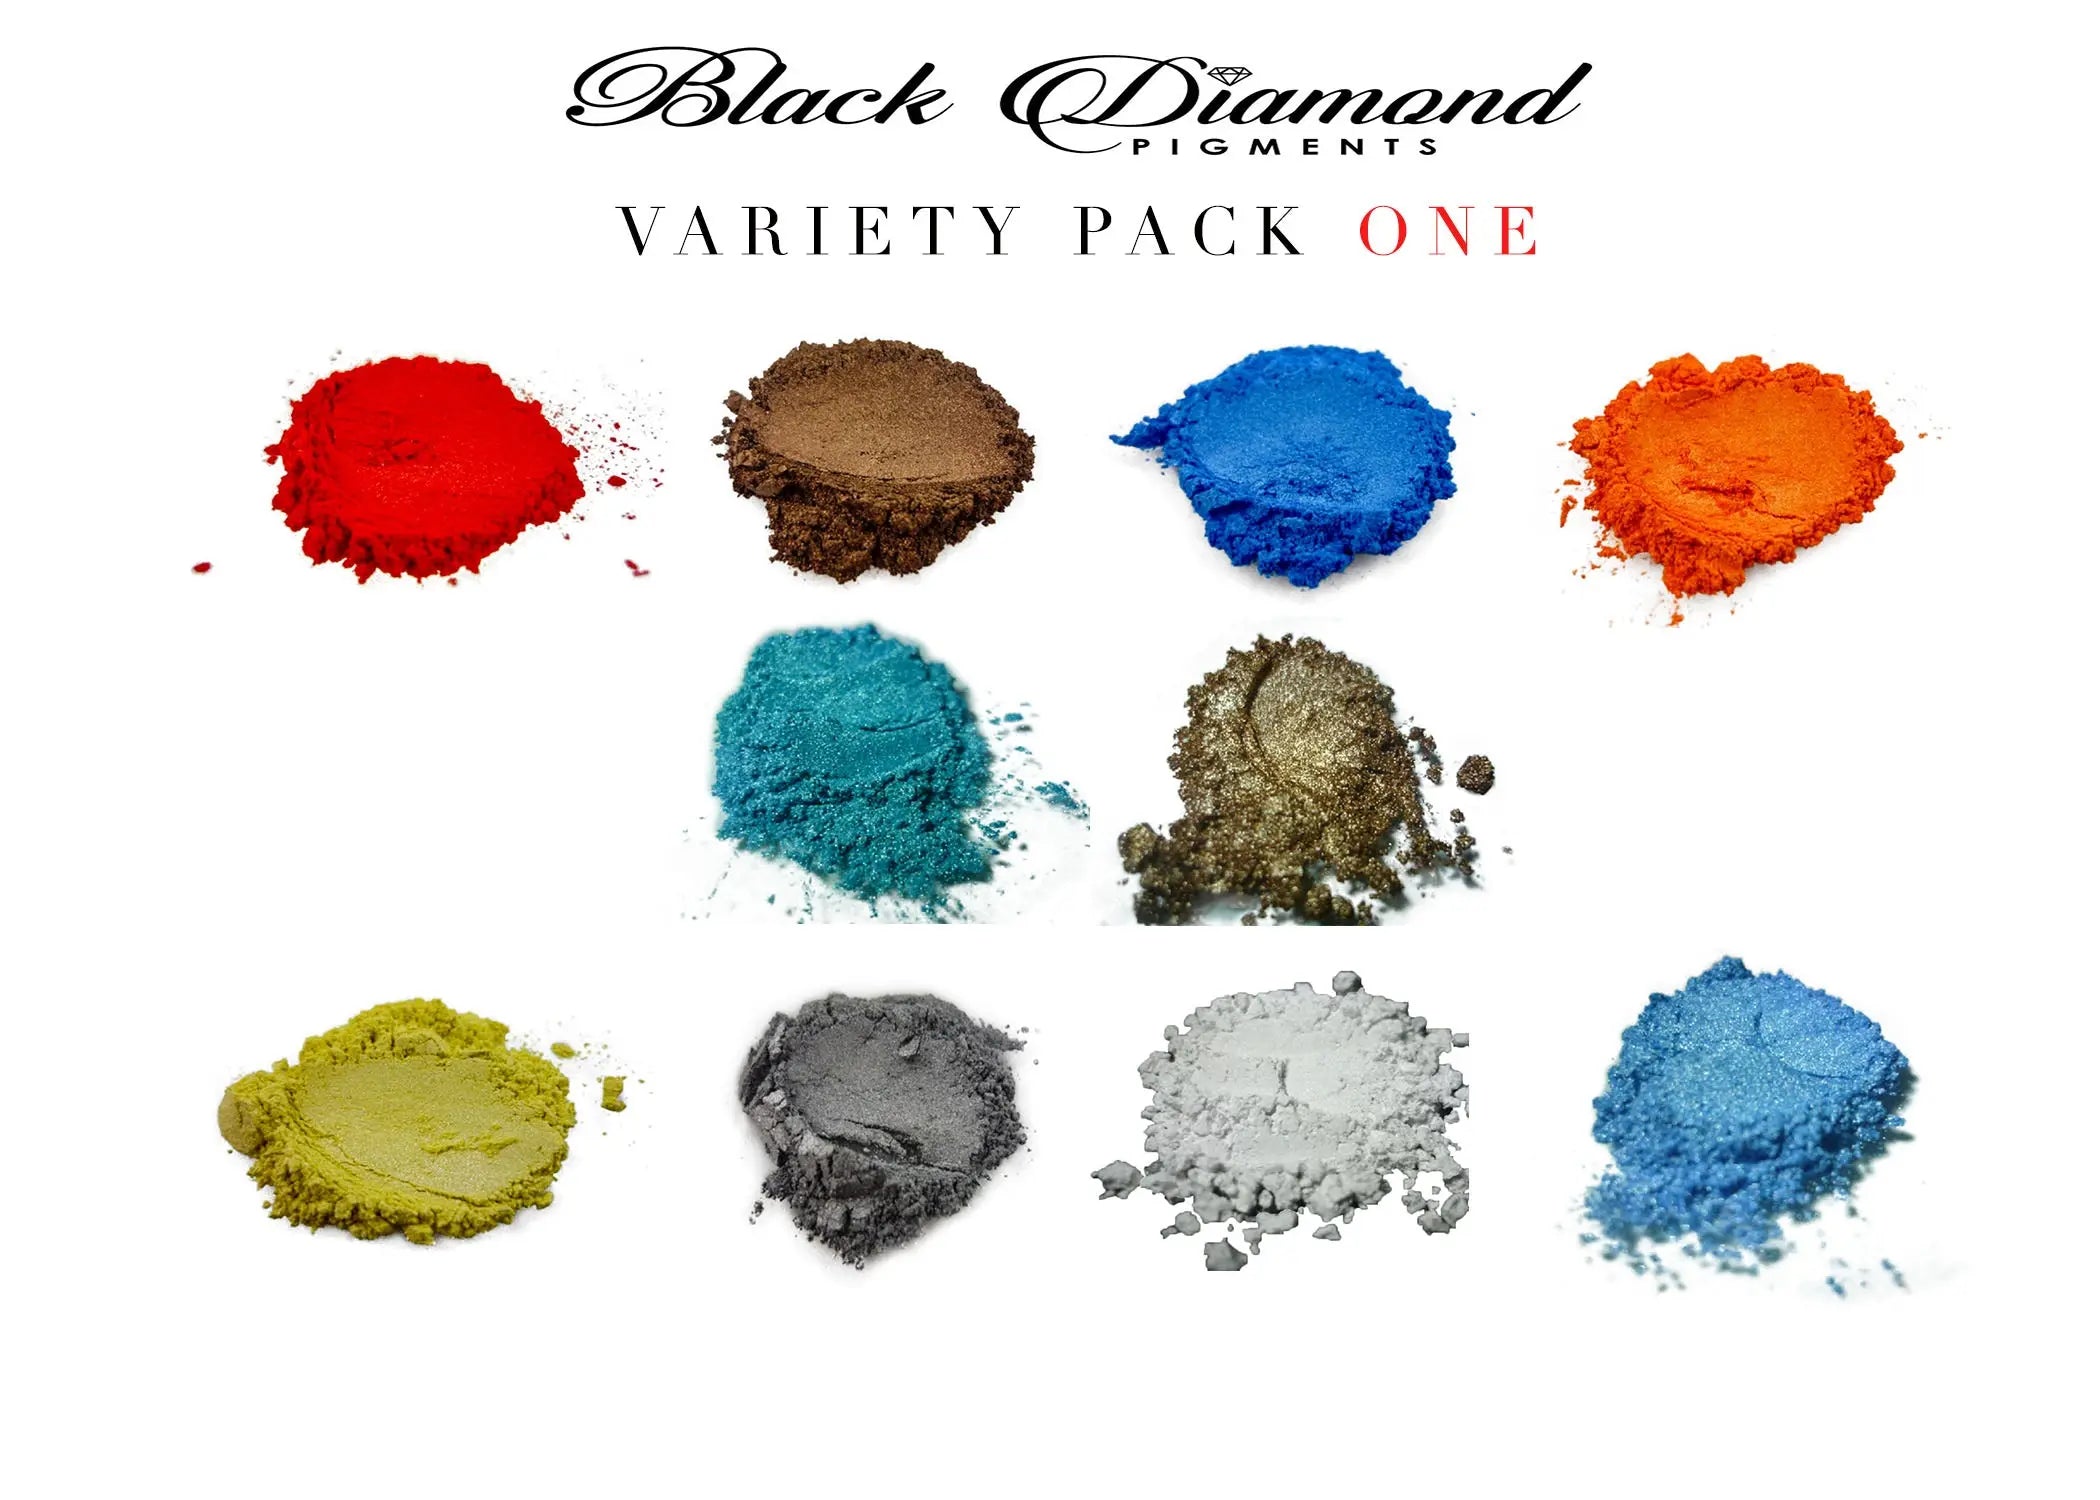 VARIETY PACK 1 (10 COLORS) mica powder pigment packs Black Diamond Pigments® - Black Diamond Pigments